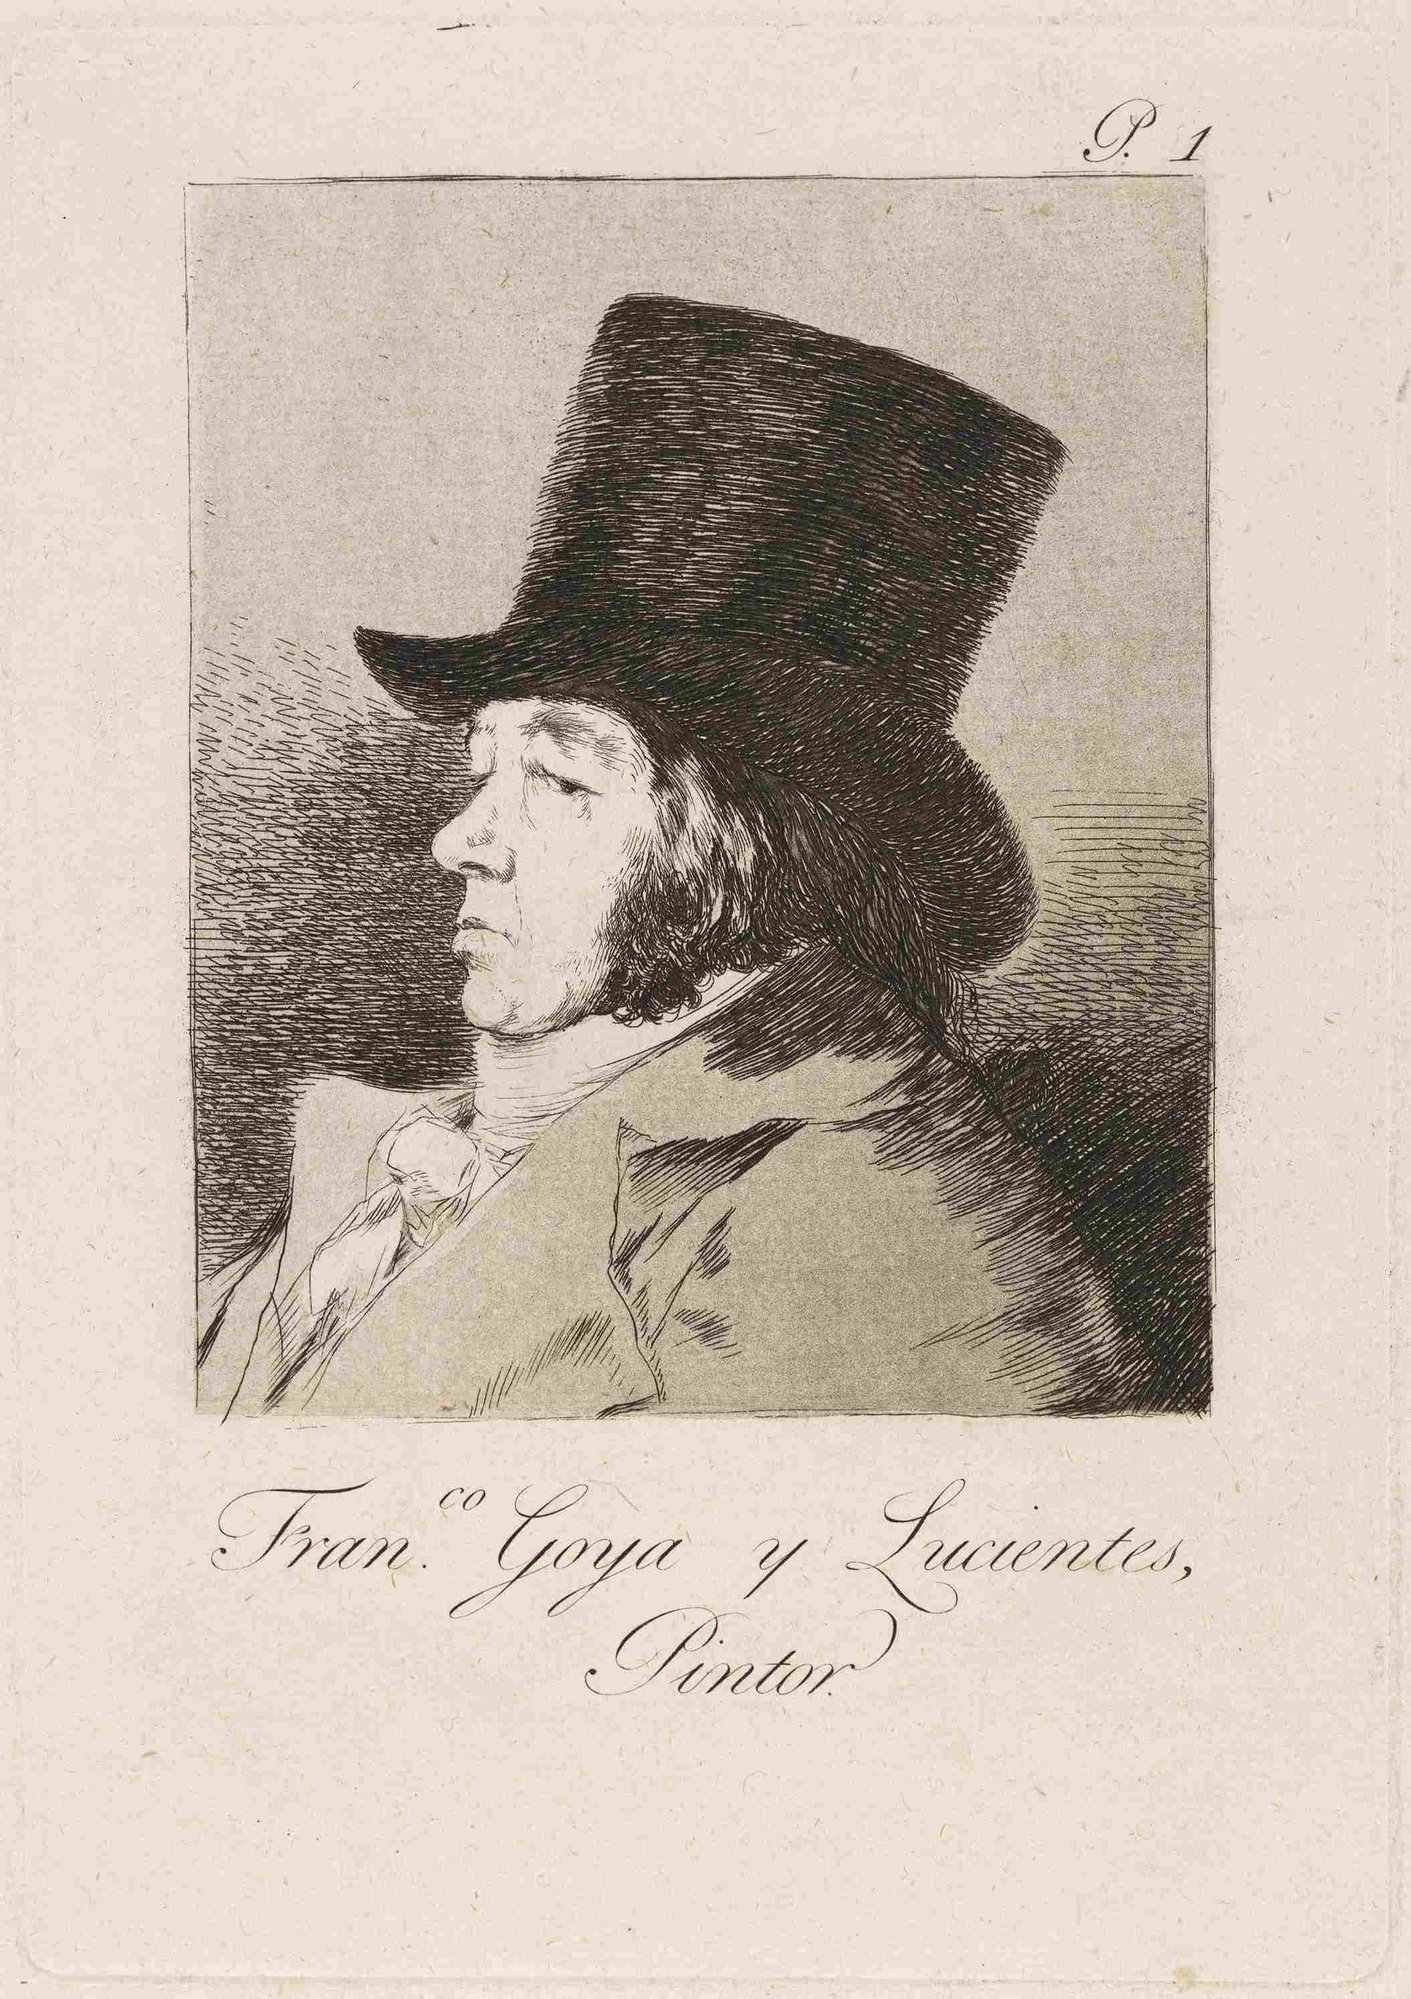 Francisco Goya y Lucientes, Pintor (Francisco Goya y Lucientes, painter) (1796-1797)